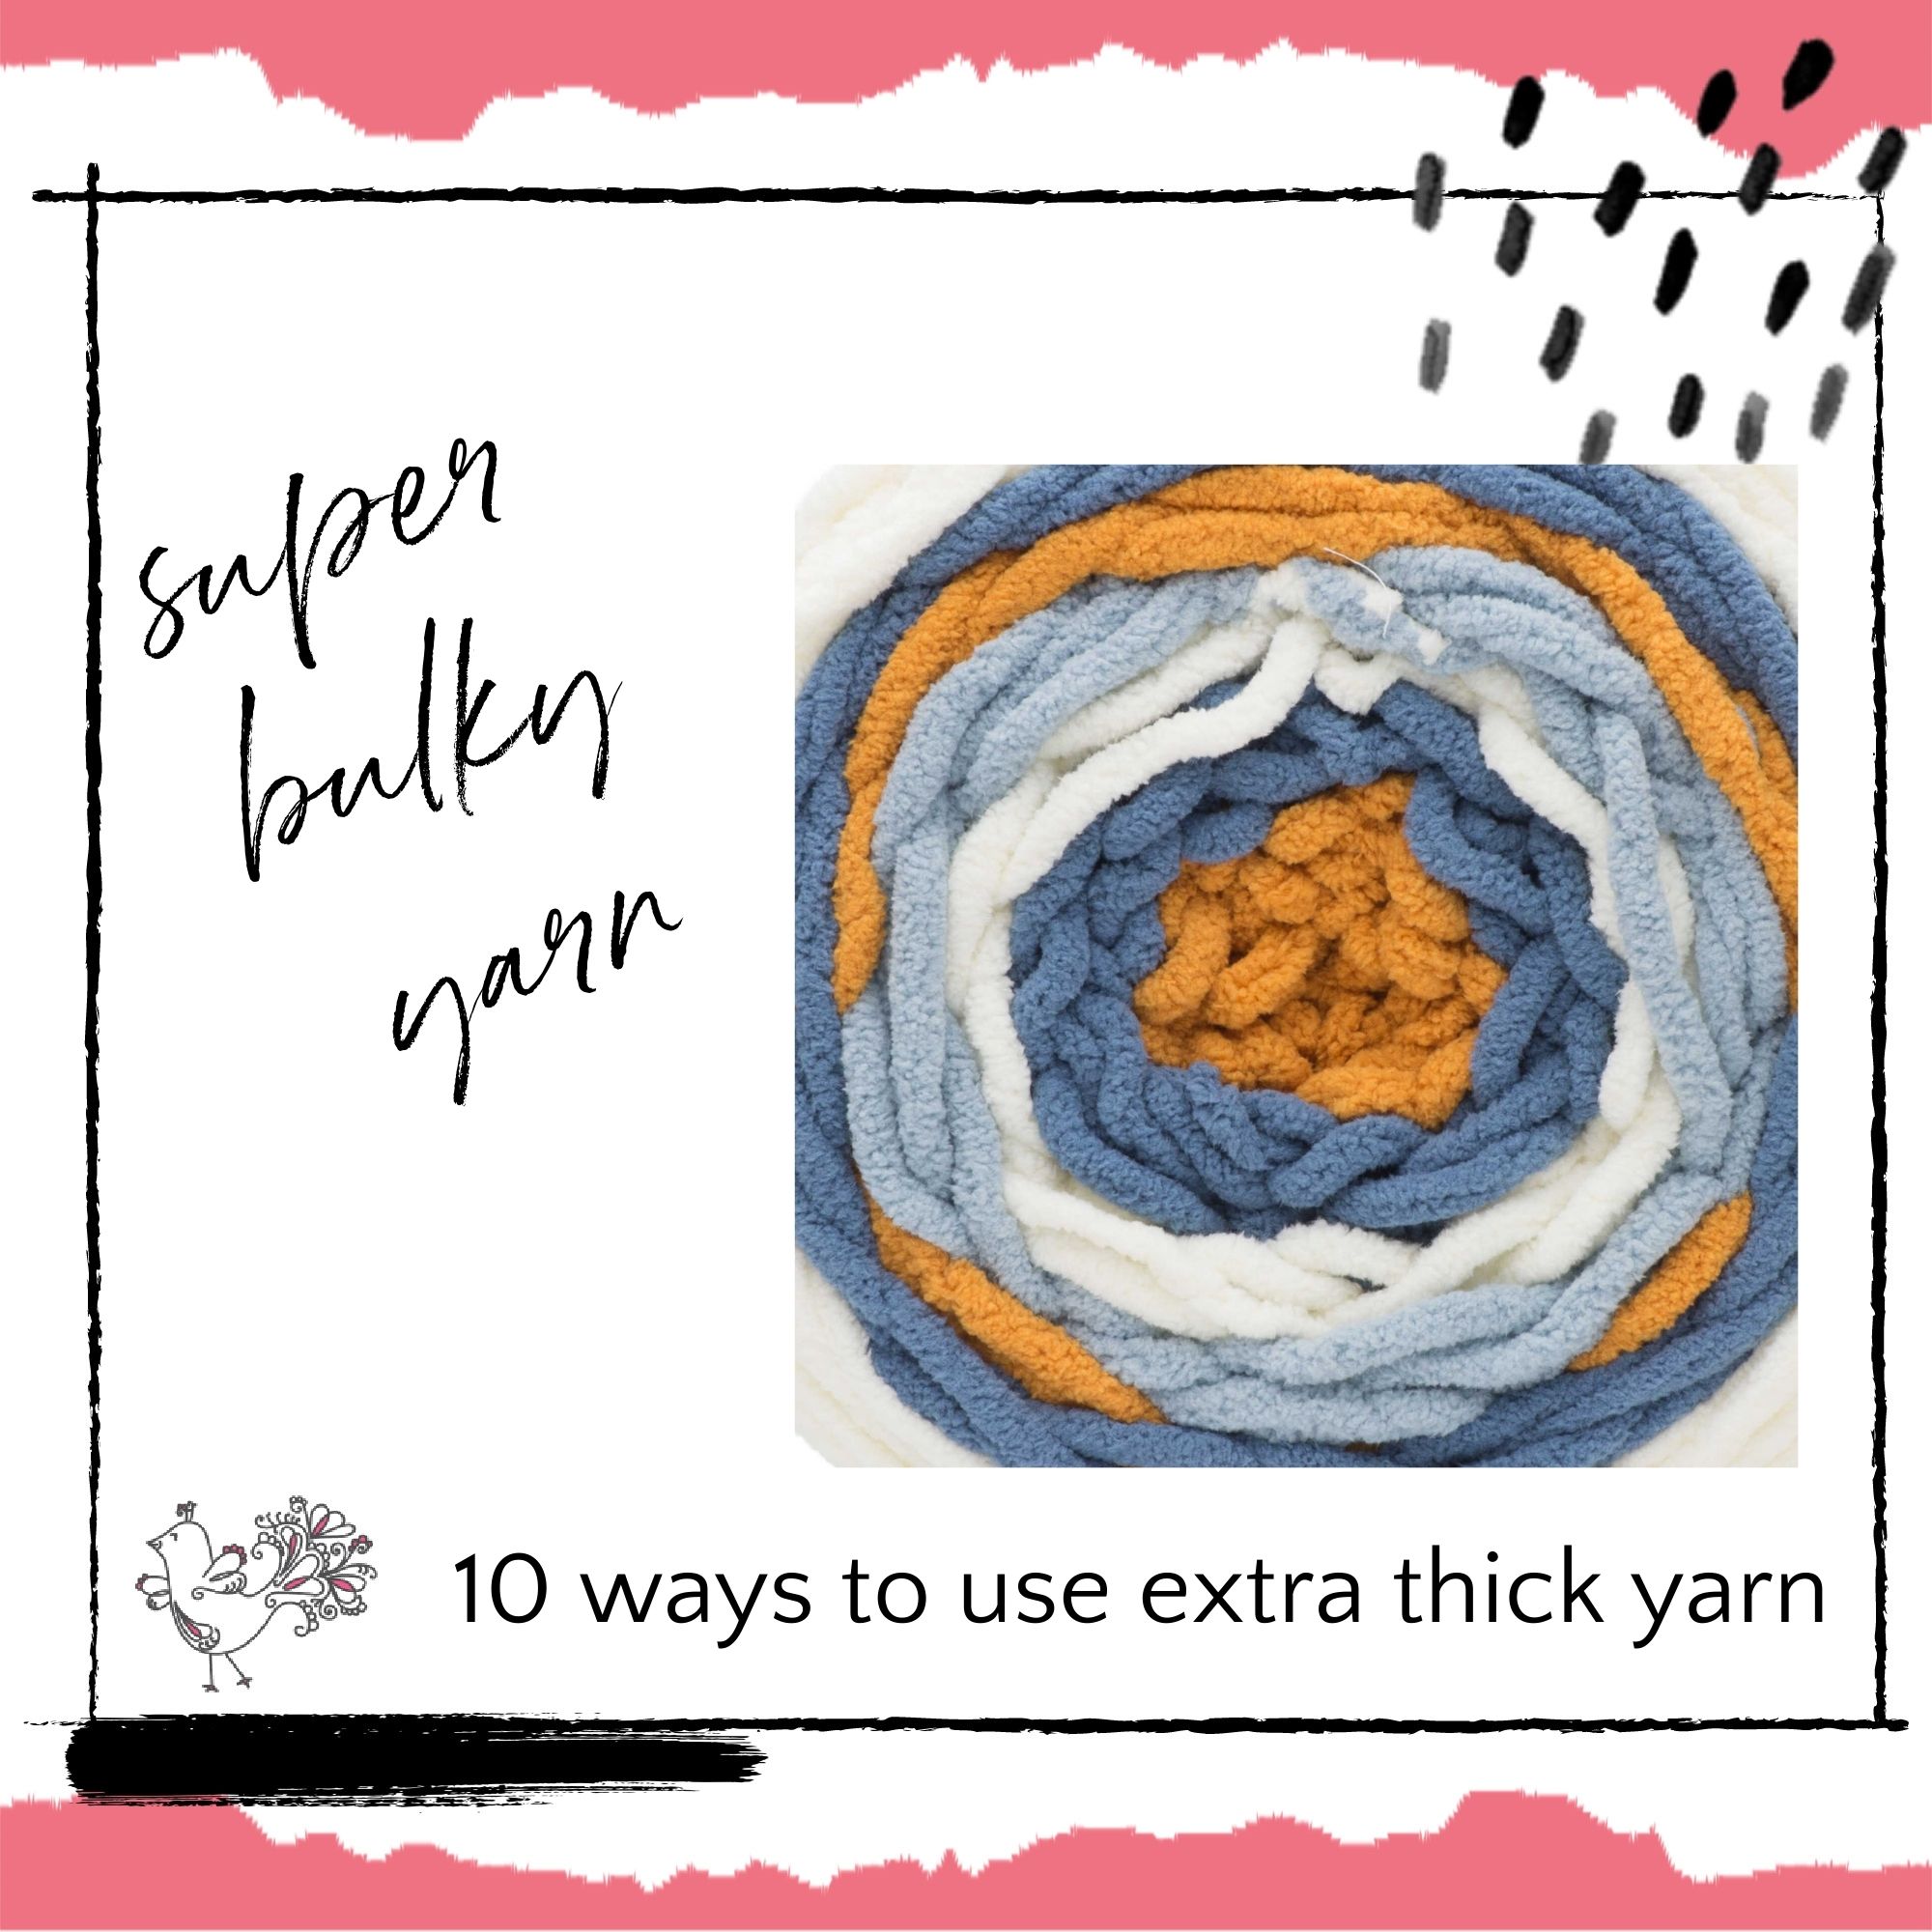 Lion Brand Jiffy Yarn Denim Blue Bulky Knit Crochet Lot 2